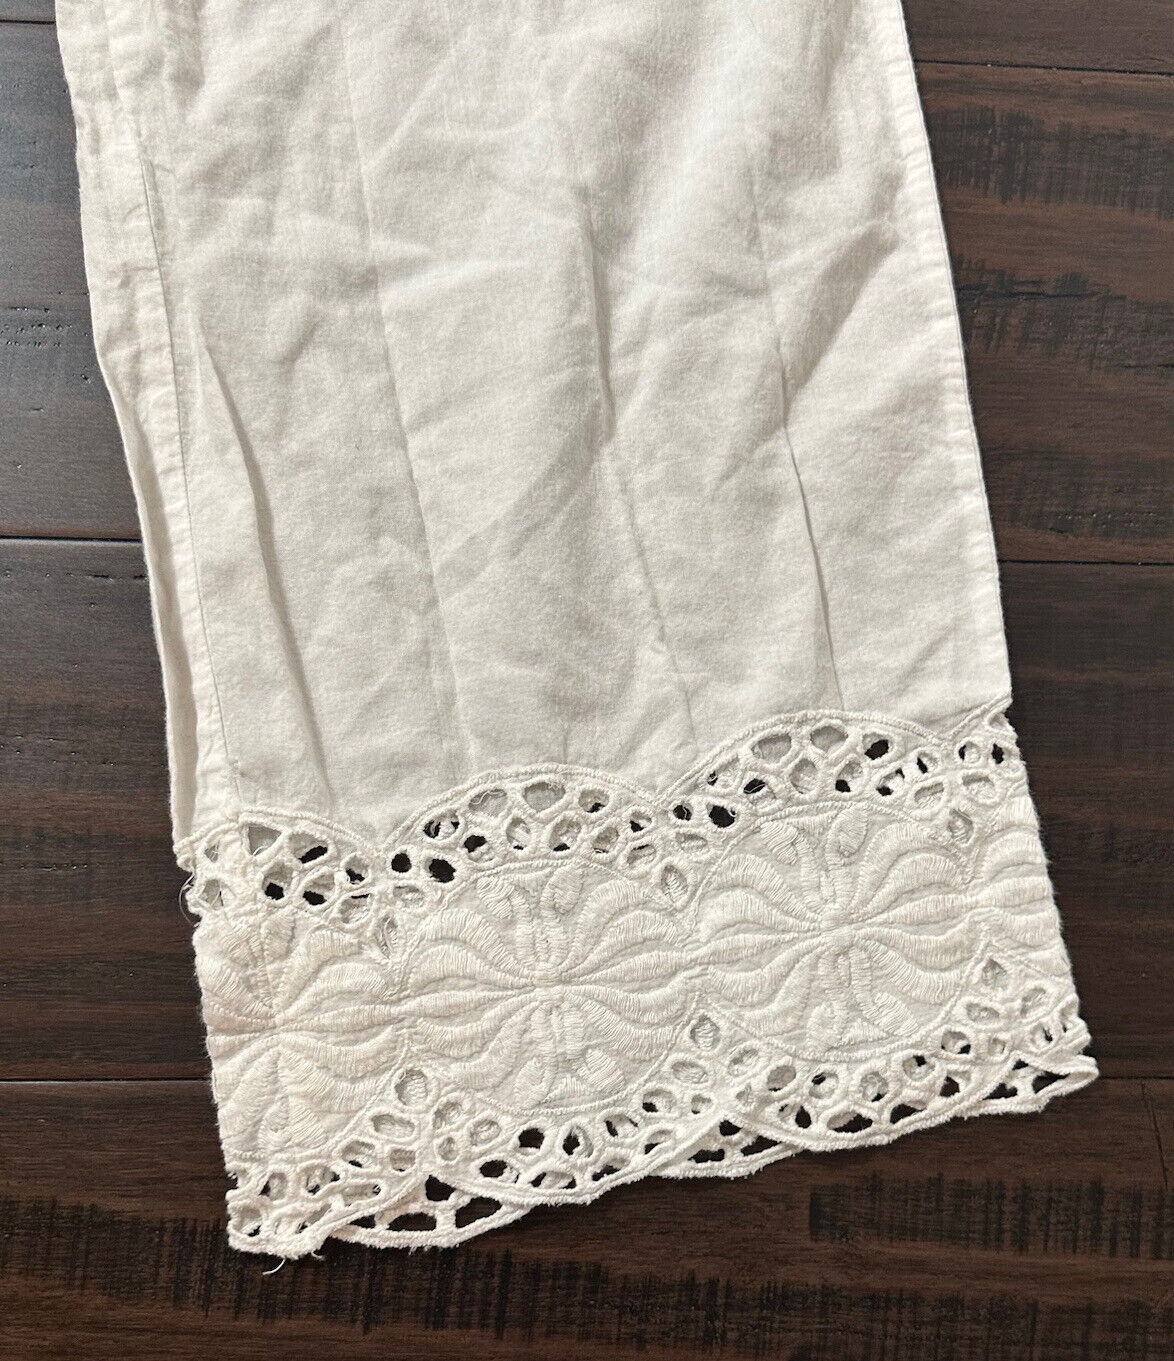 SIGRID OLSEN Sleepwear Pants Size S Small White Cotton Eyelet Bottom | eBay